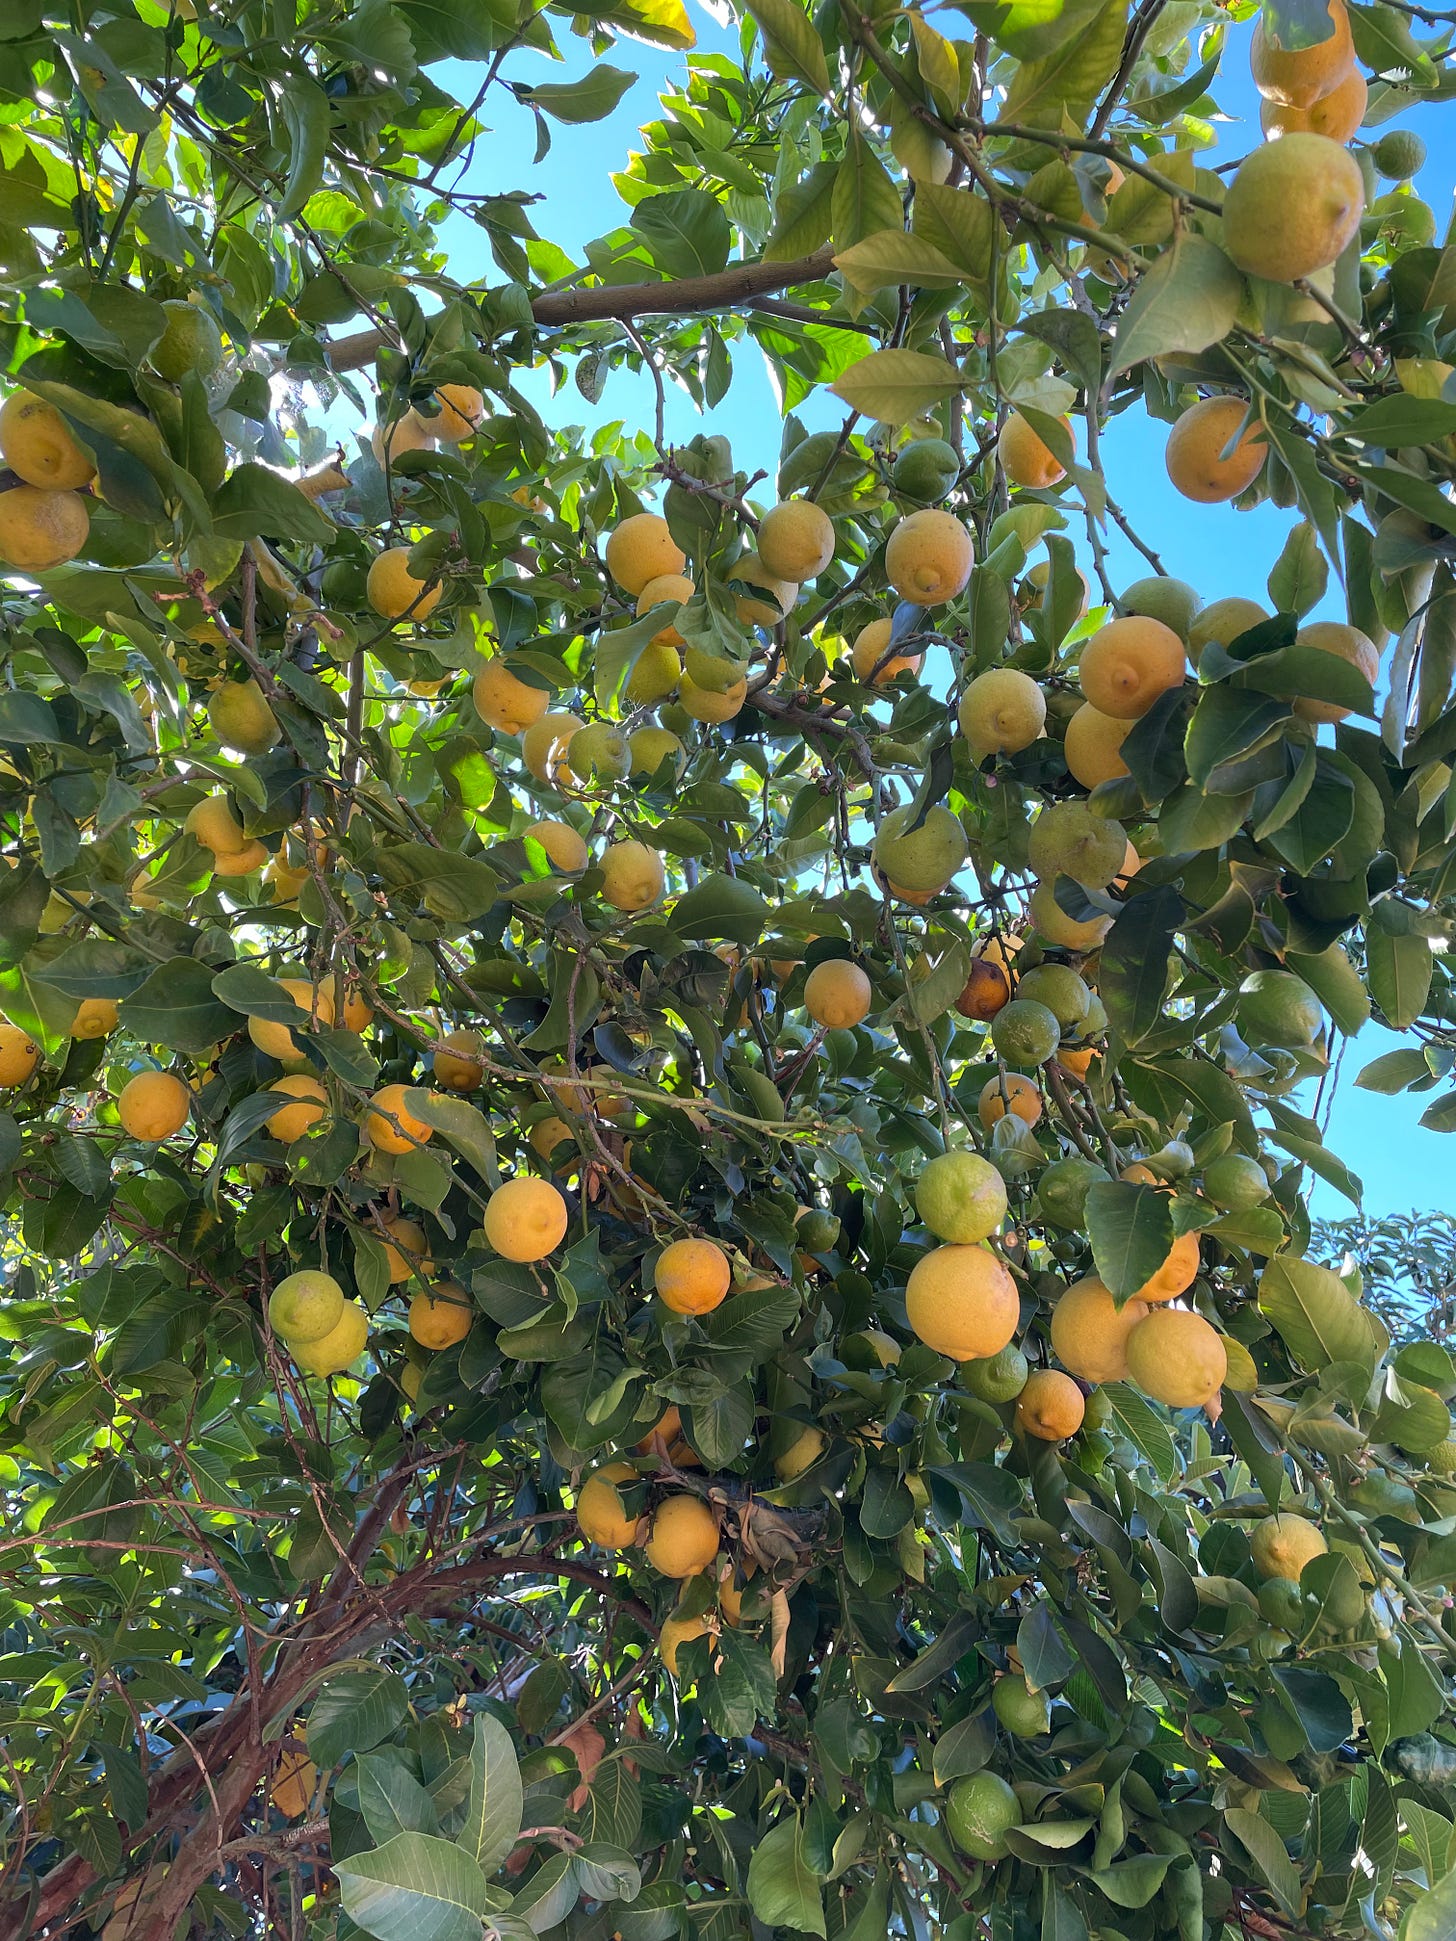 Dozens of ripening oranges in an orange tree